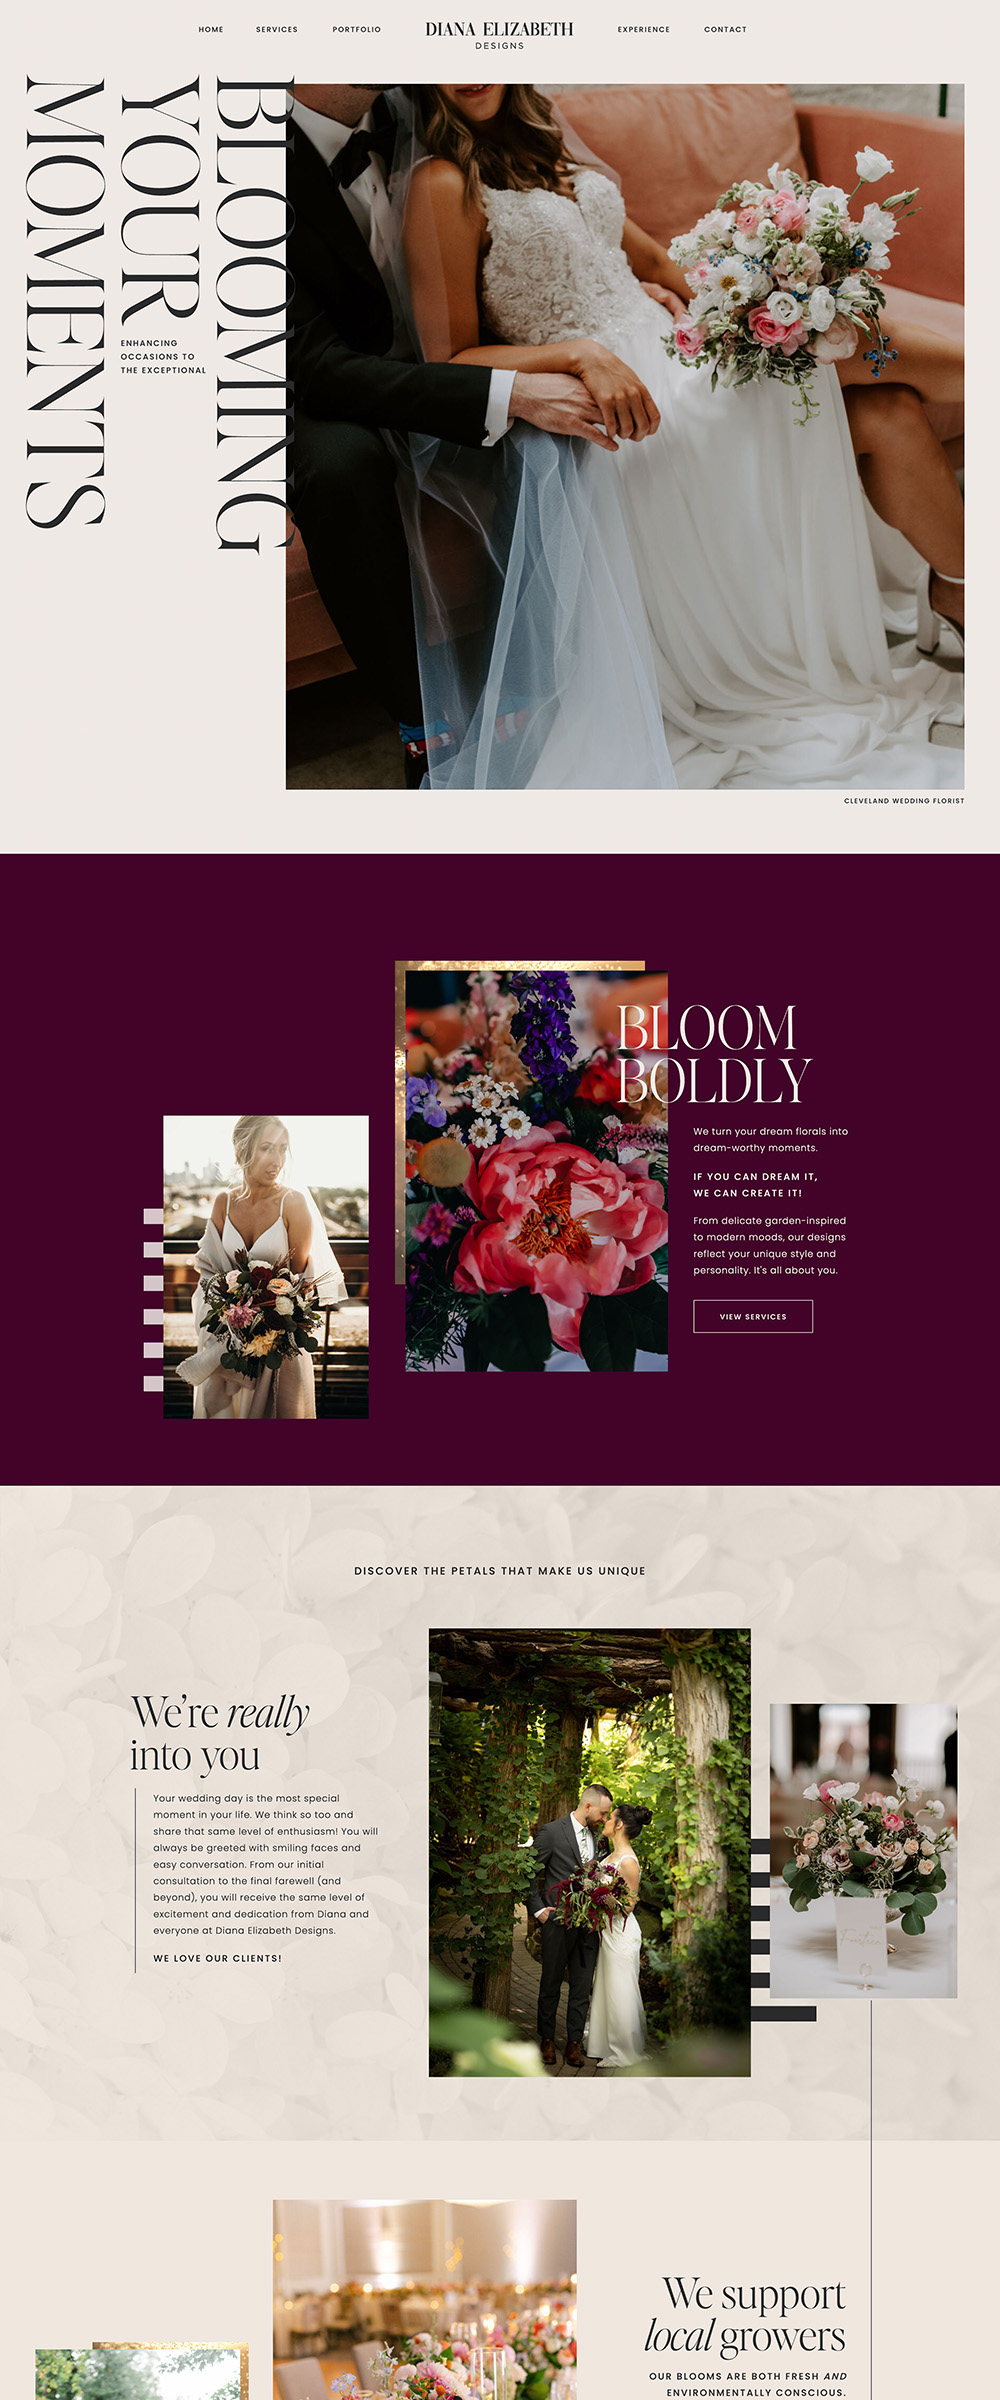 Showit website design for florists | Diana Elizabeth Designs - by Hey Hello Studio